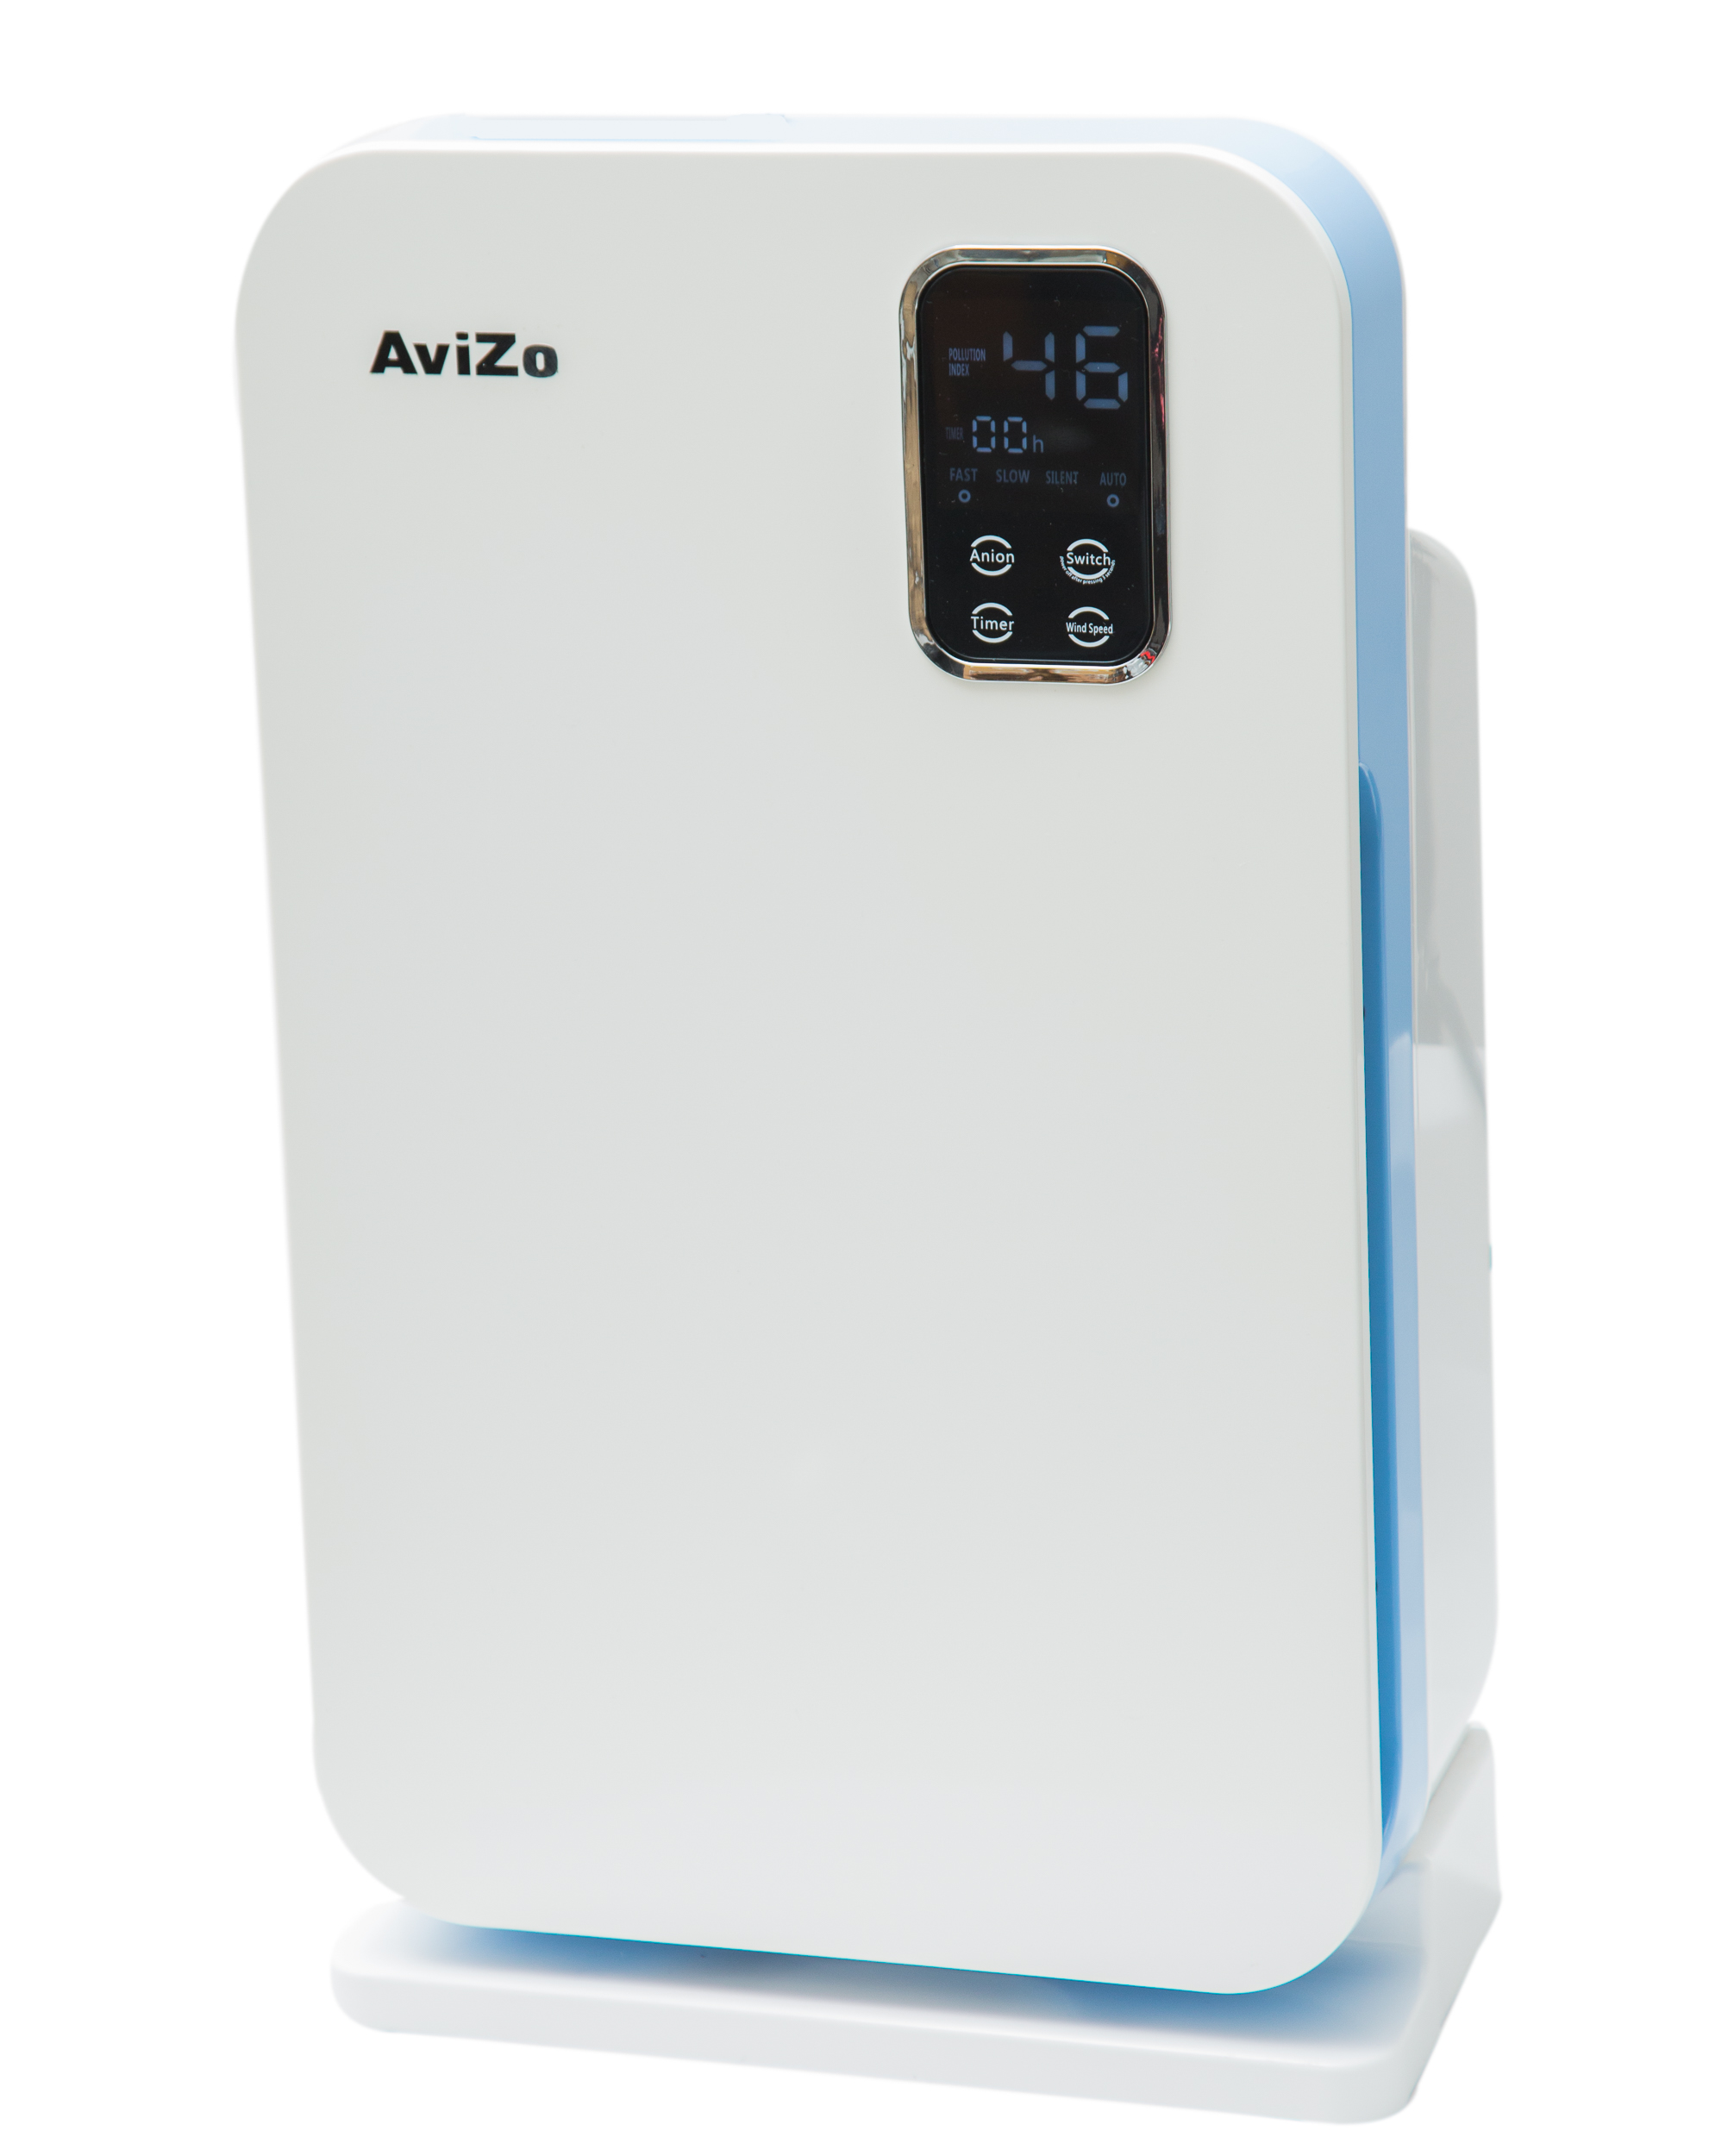 Avizo Air purifiers